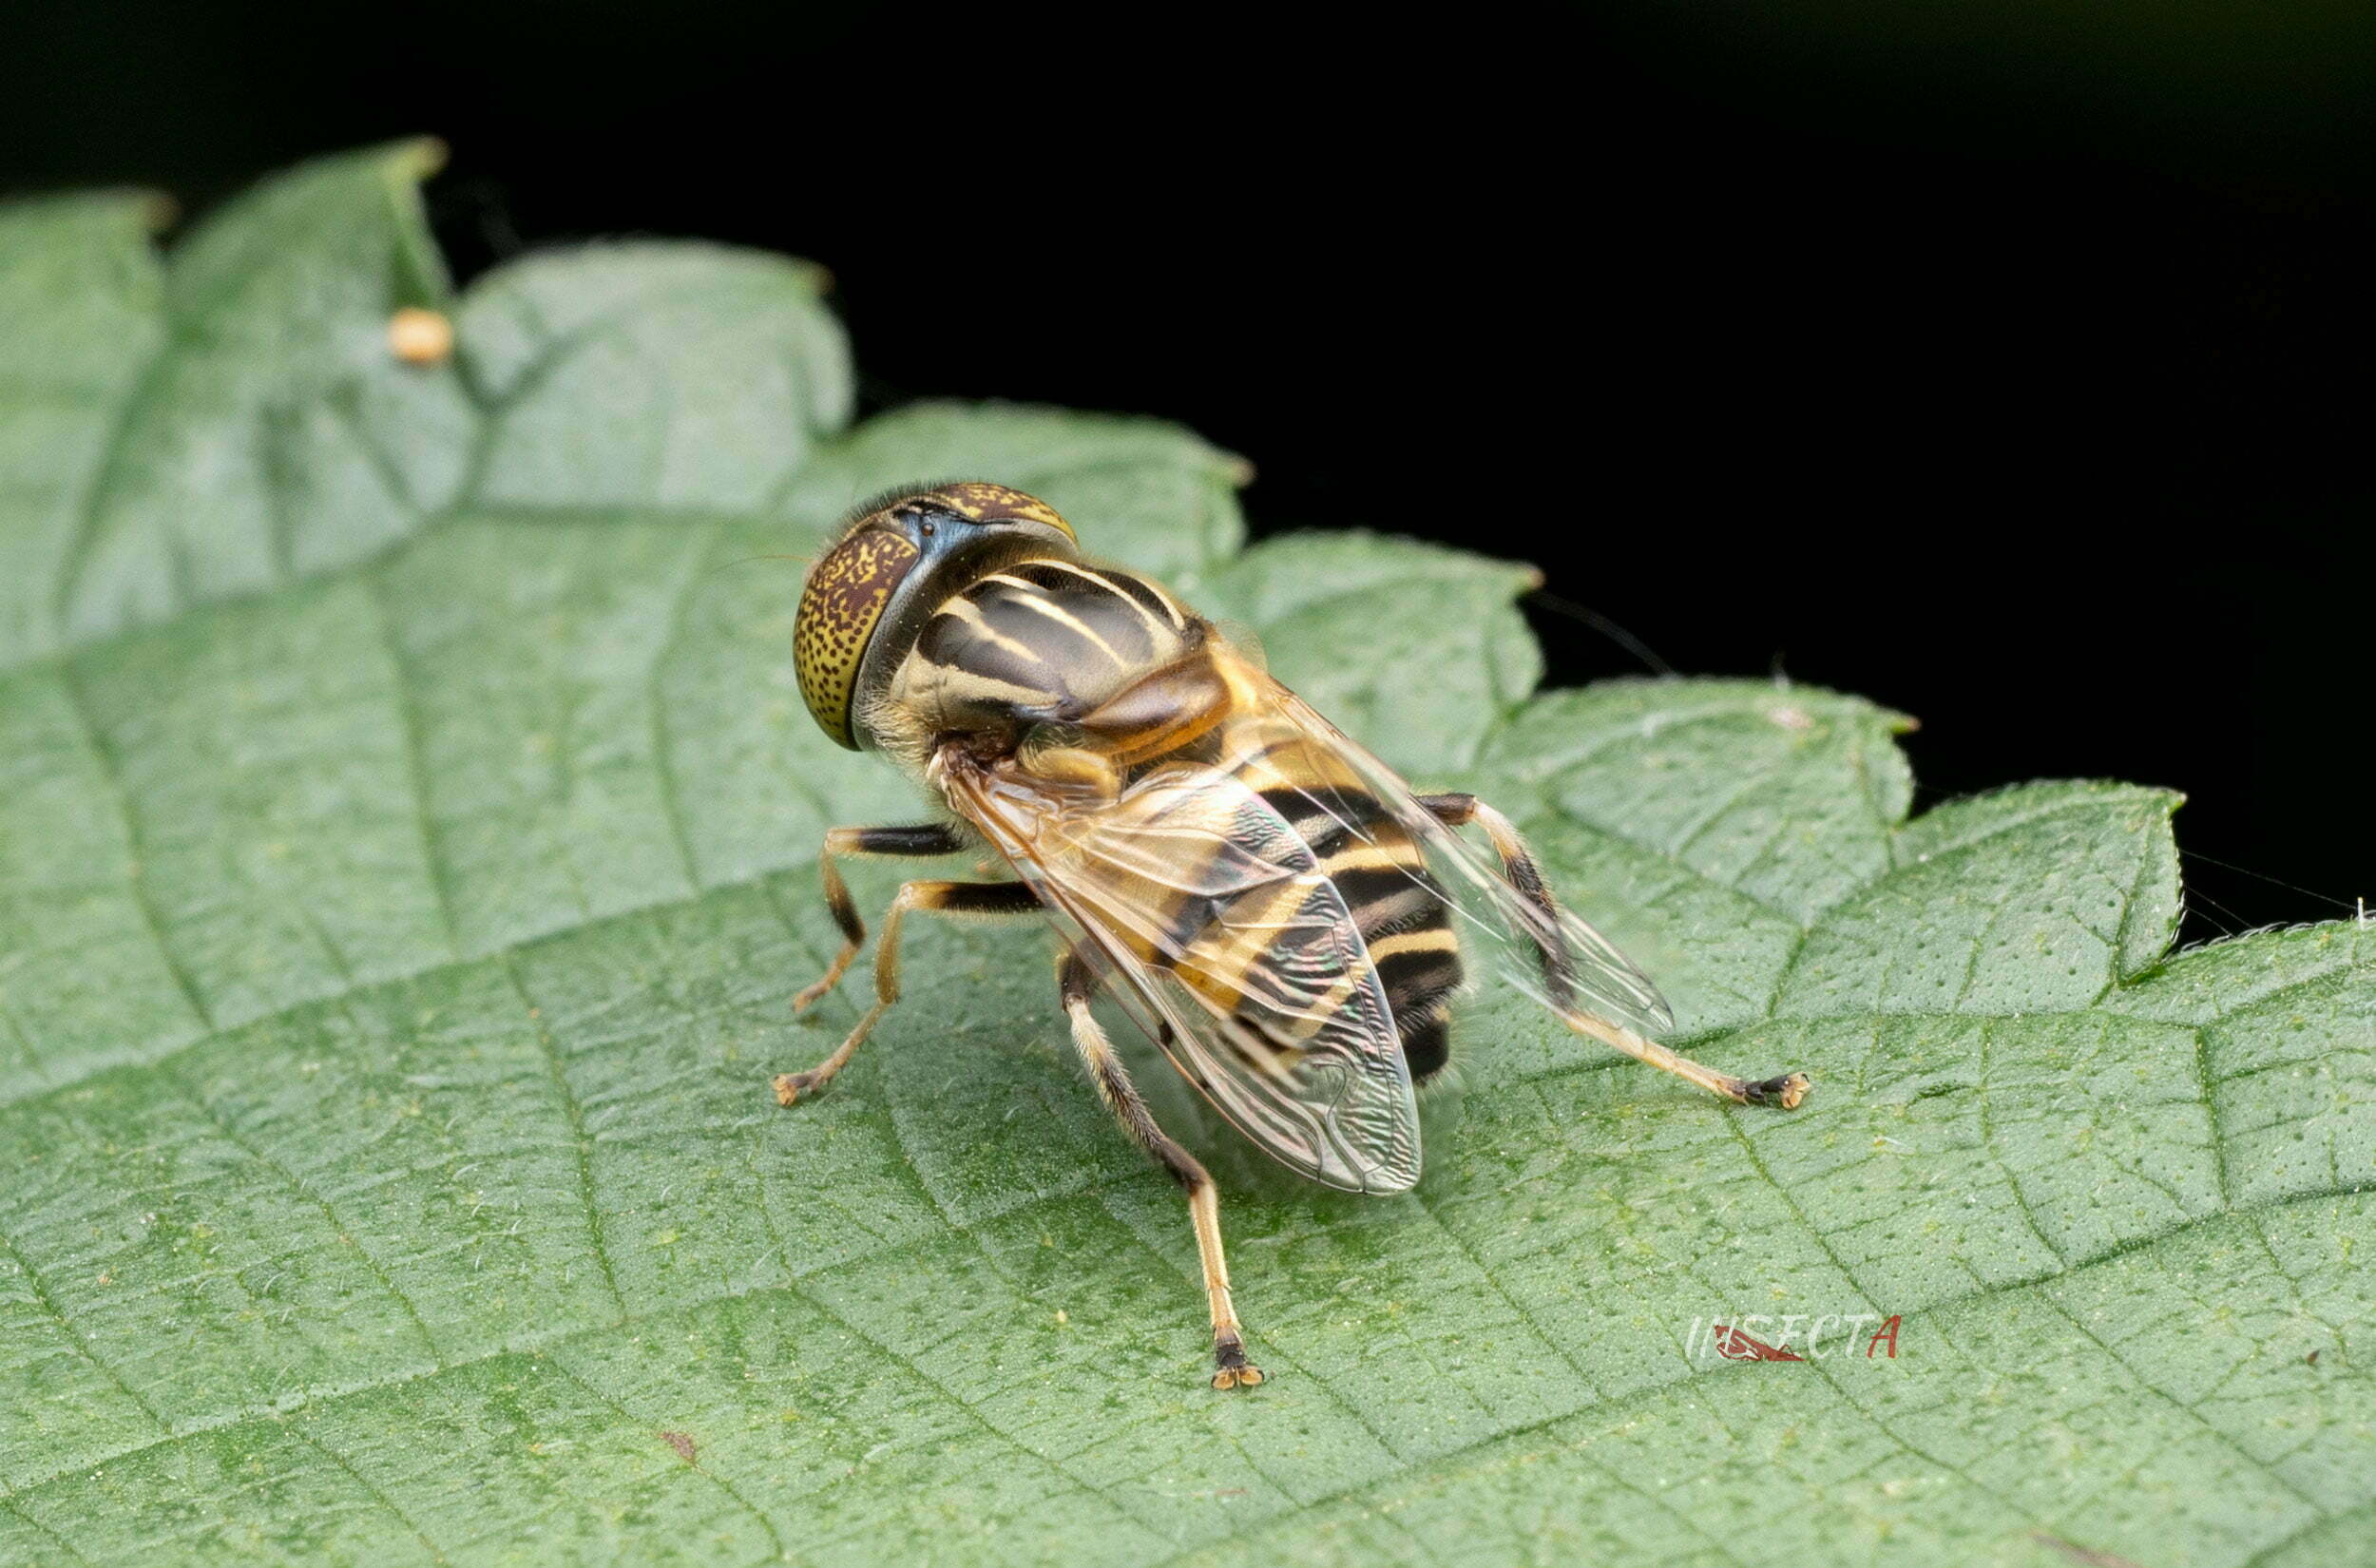 黄跗斑眼蚜蝇 Eristalinus quinquestriatus 生态照1